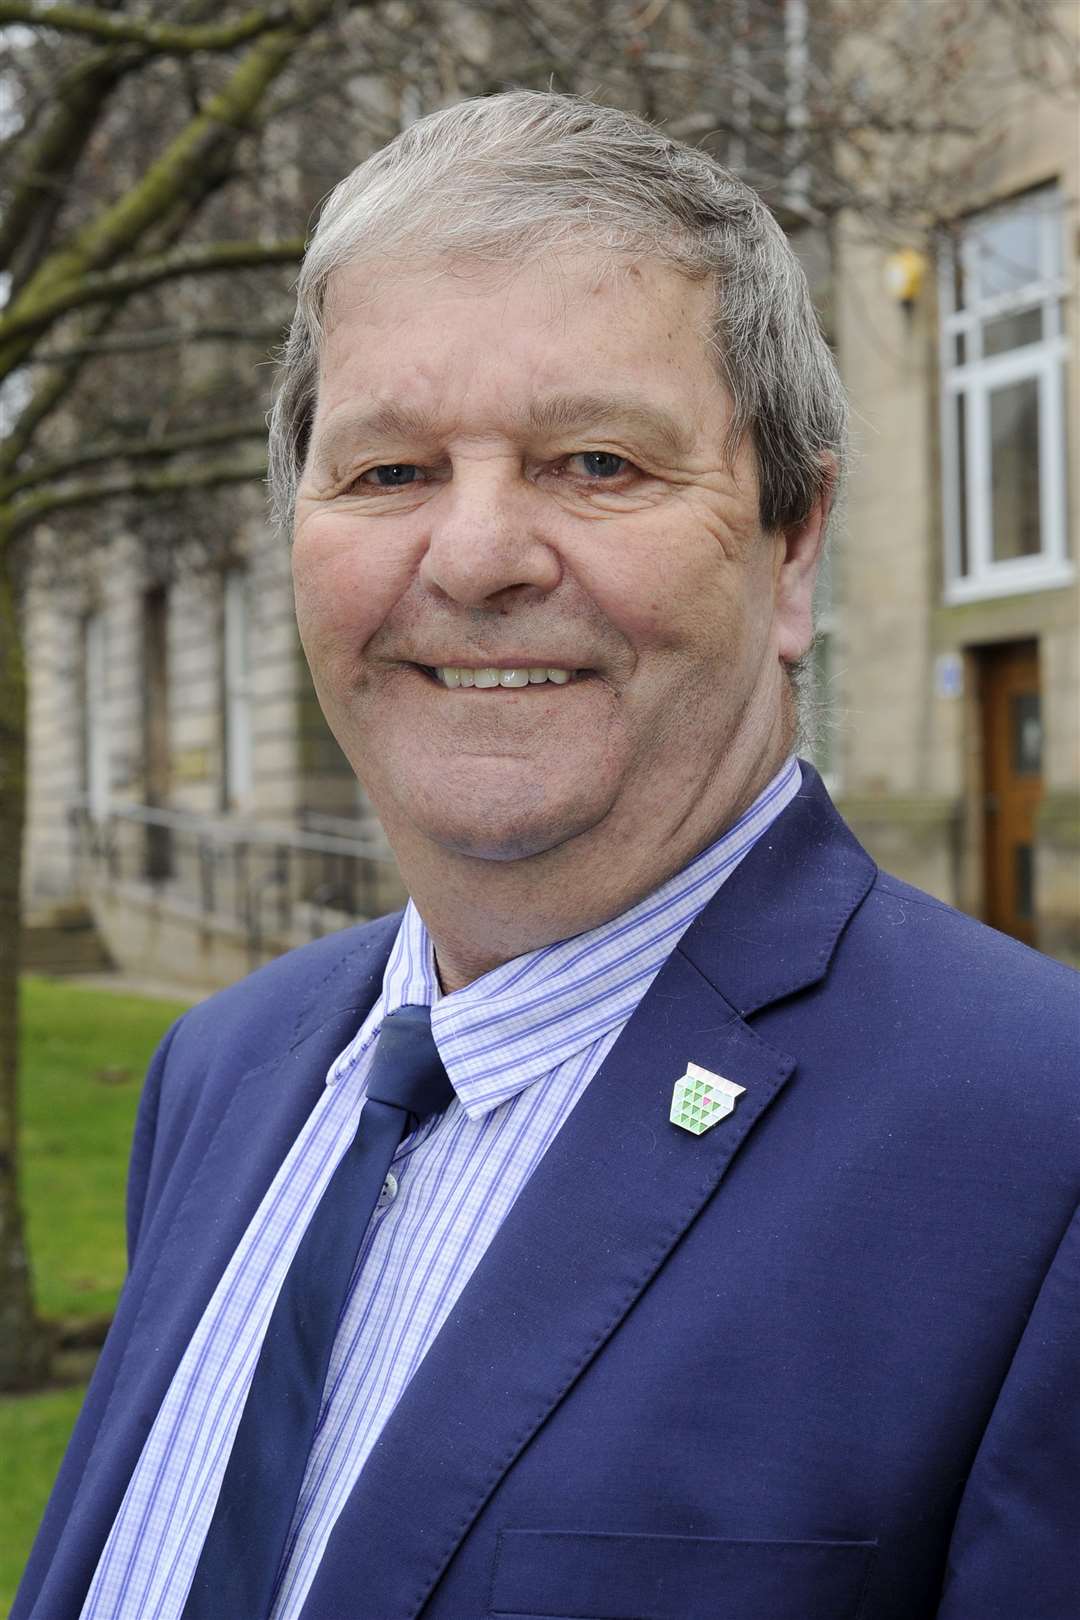 Councillor Gordon Cowie. Daniel Forsyth